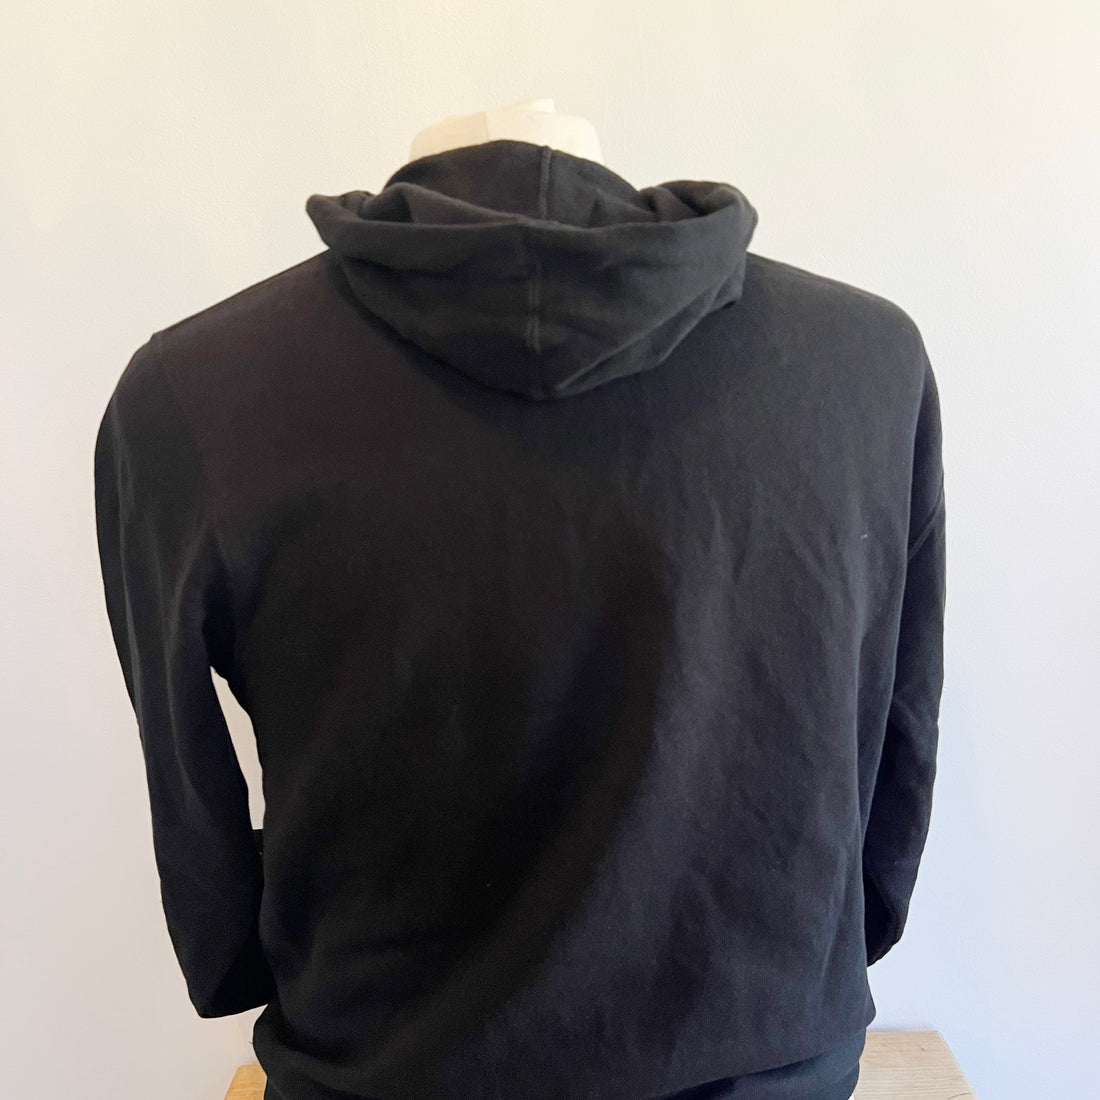 Hooded Sweatshirt - Black / Black